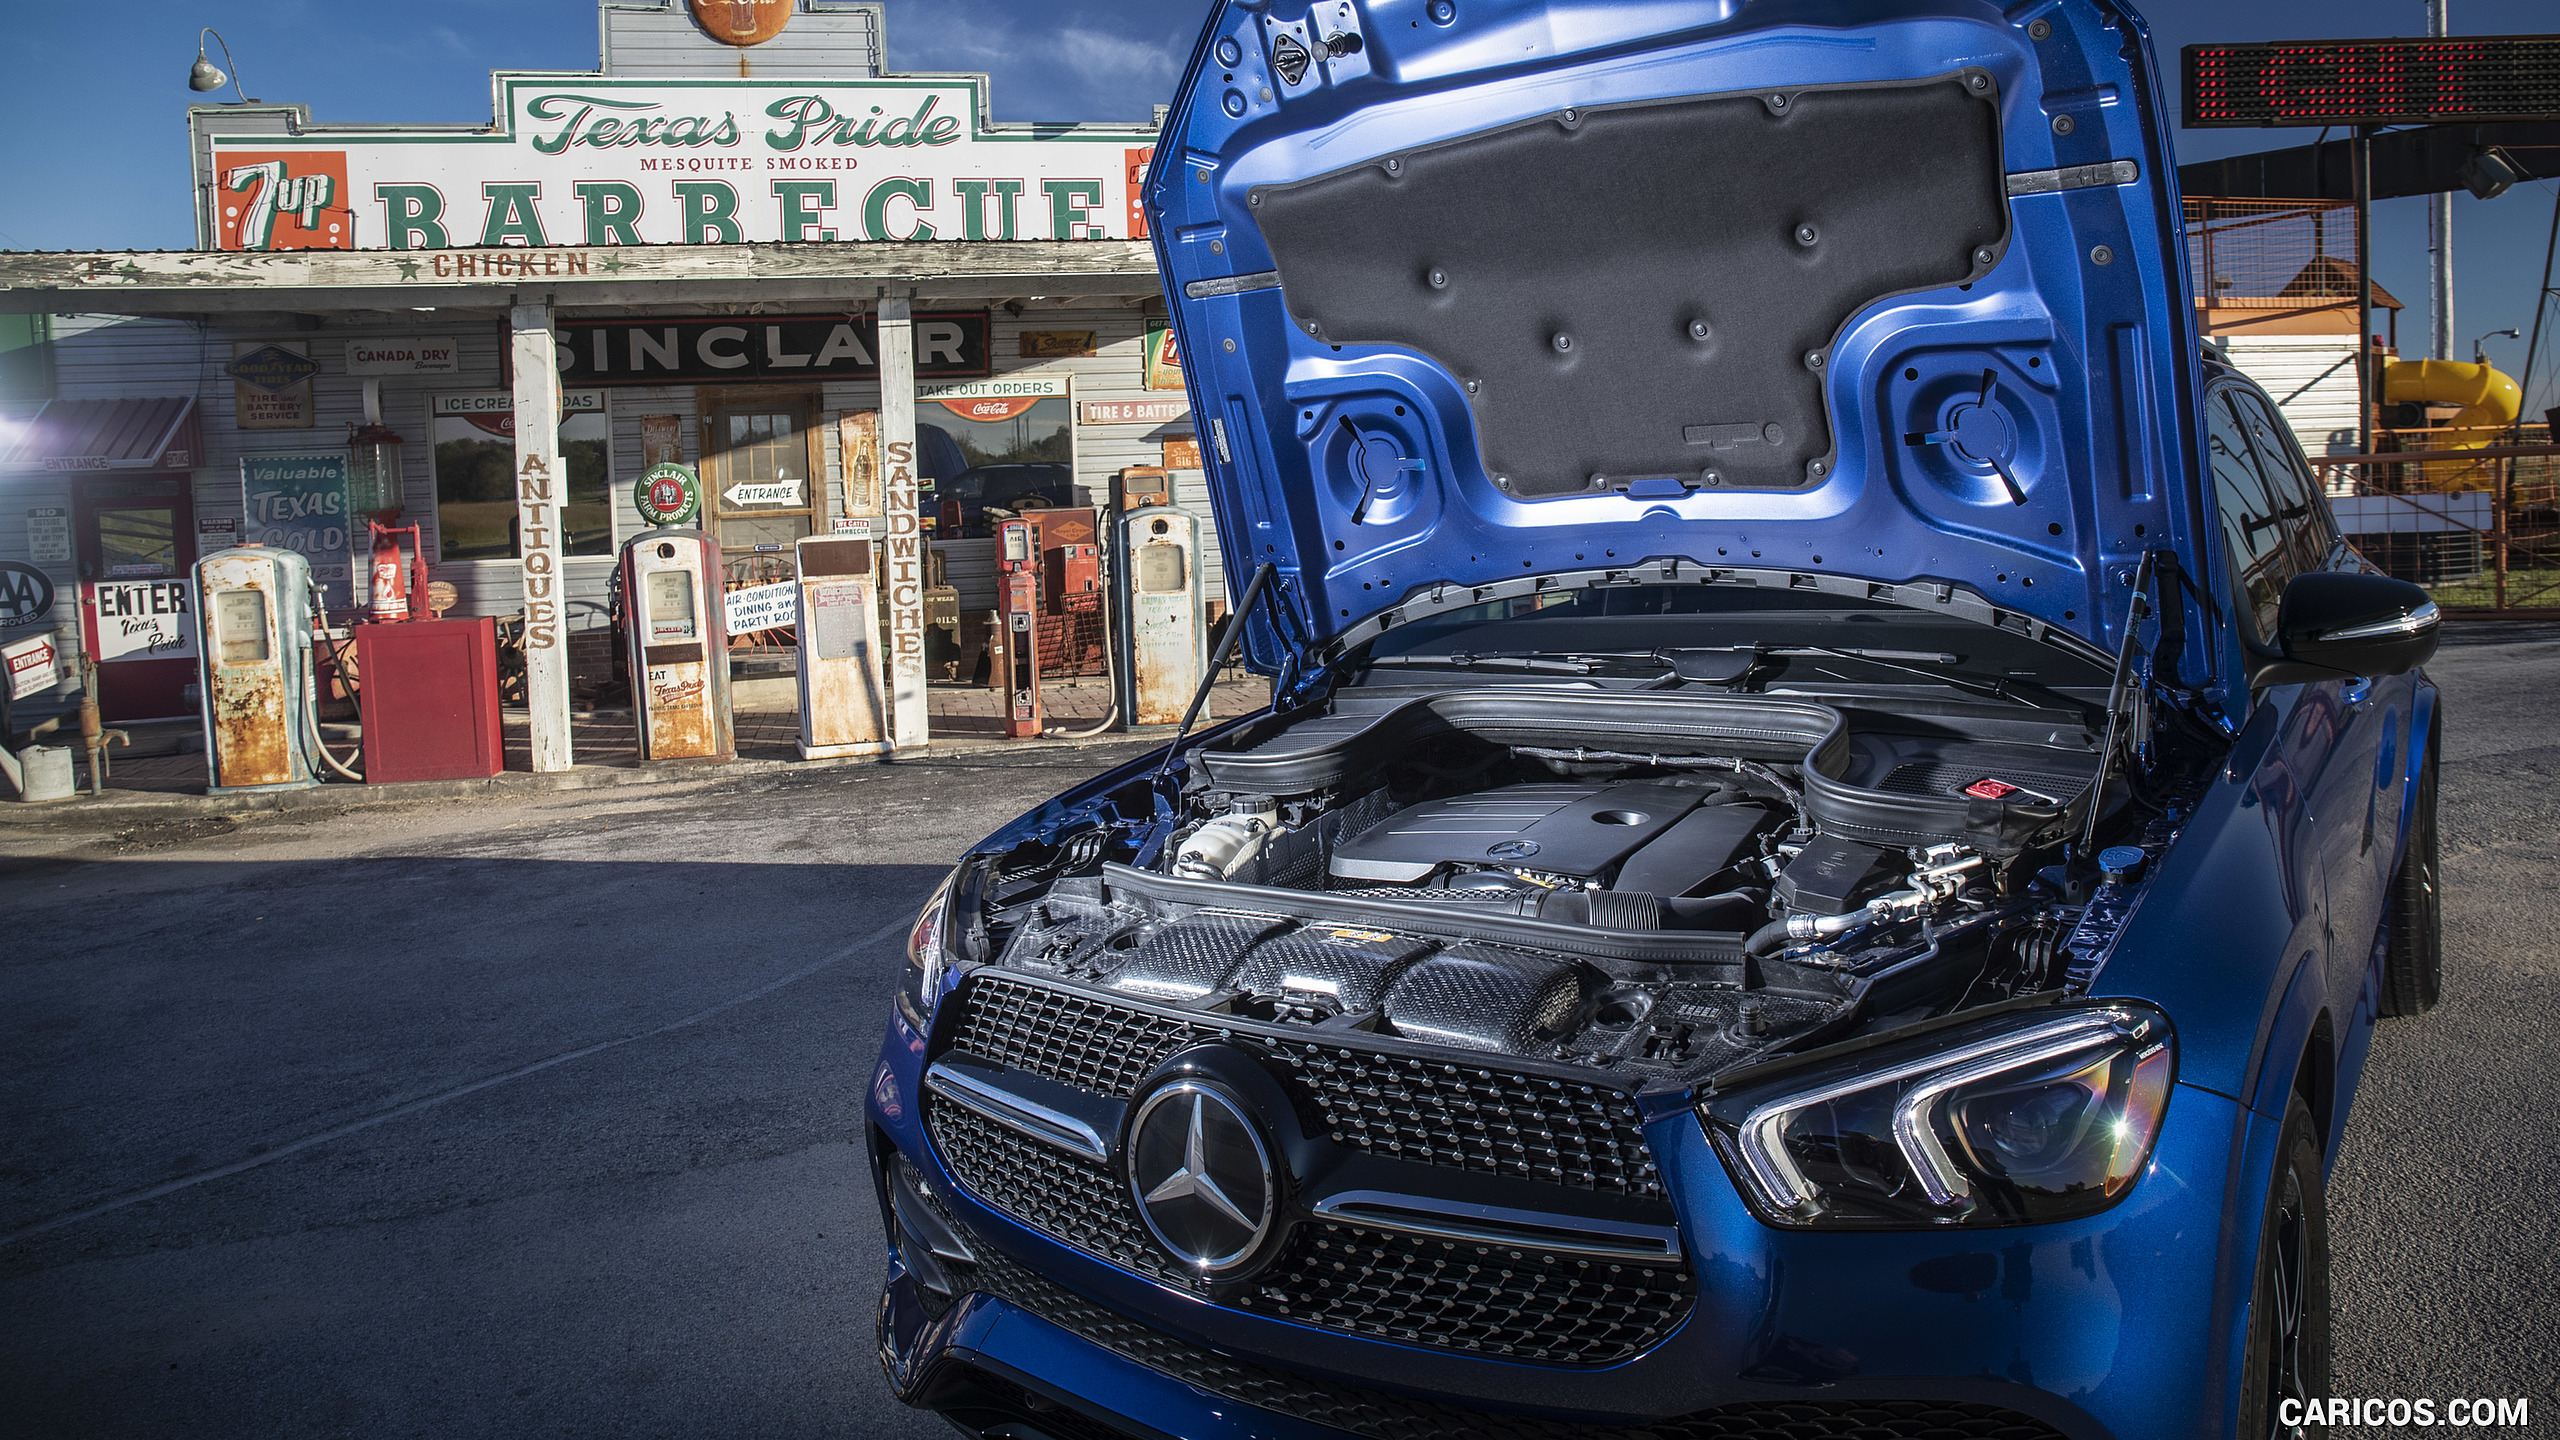 2020 Mercedes-Benz GLE 350 4MATIC (Color: Brilliant Blue; US-Spec) - Engine, #234 of 358